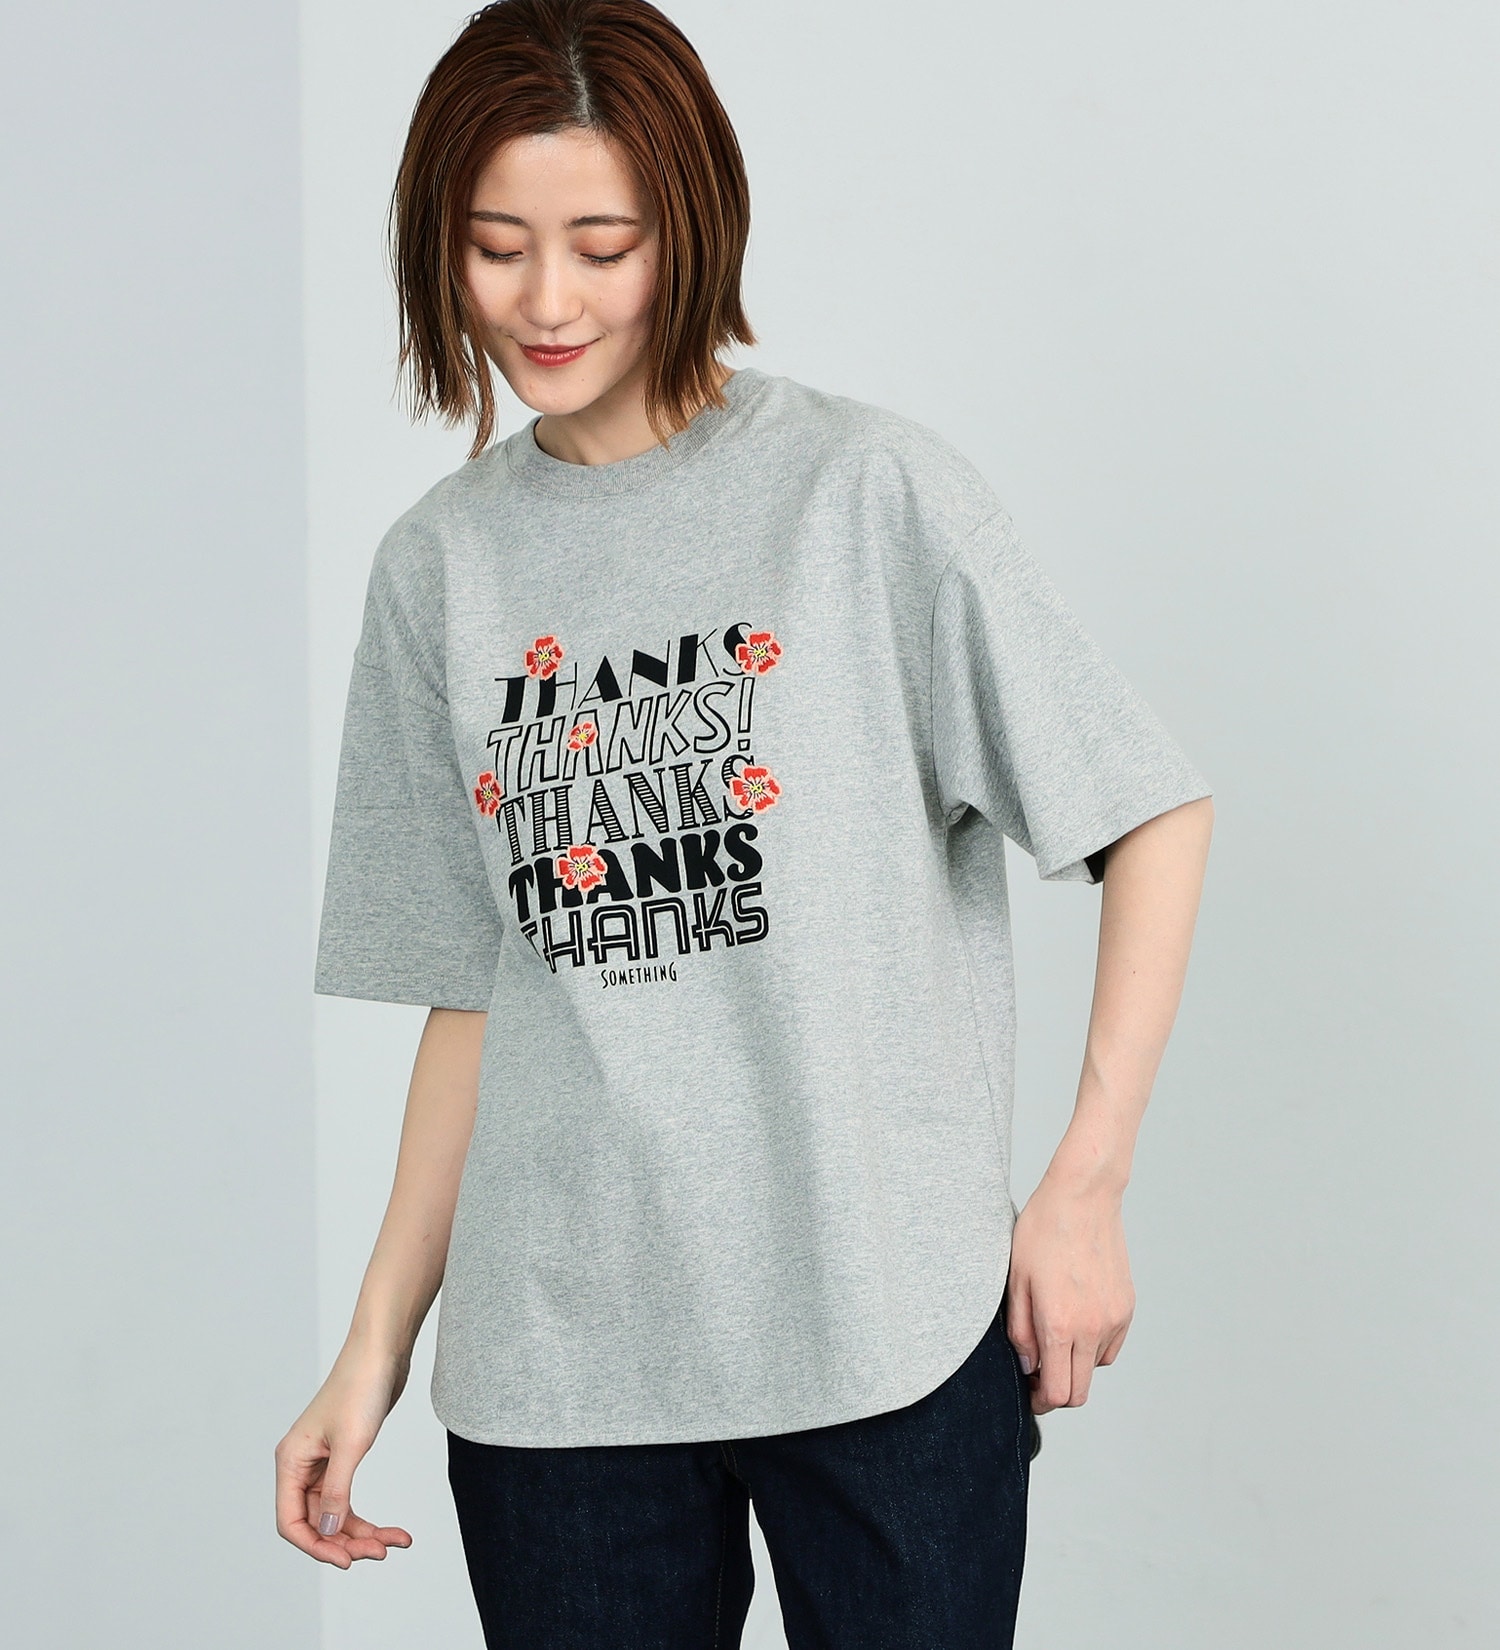 SOMETHING(サムシング)のSOMETHING POPPY 刺繍半袖Tシャツ|トップス/Tシャツ/カットソー/レディース|グレー